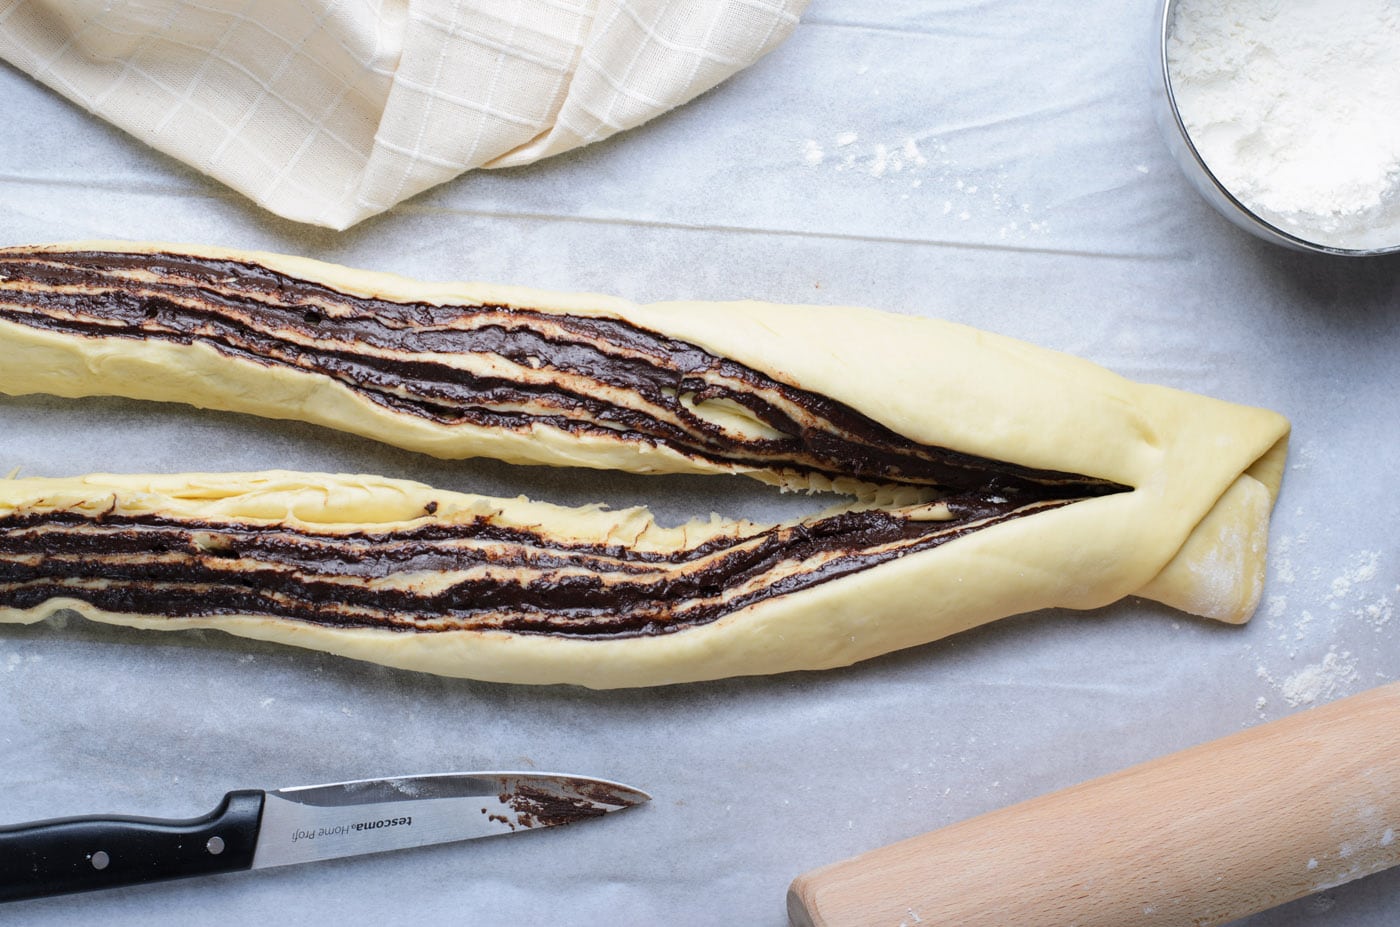 chocolate babka dough sliced in half